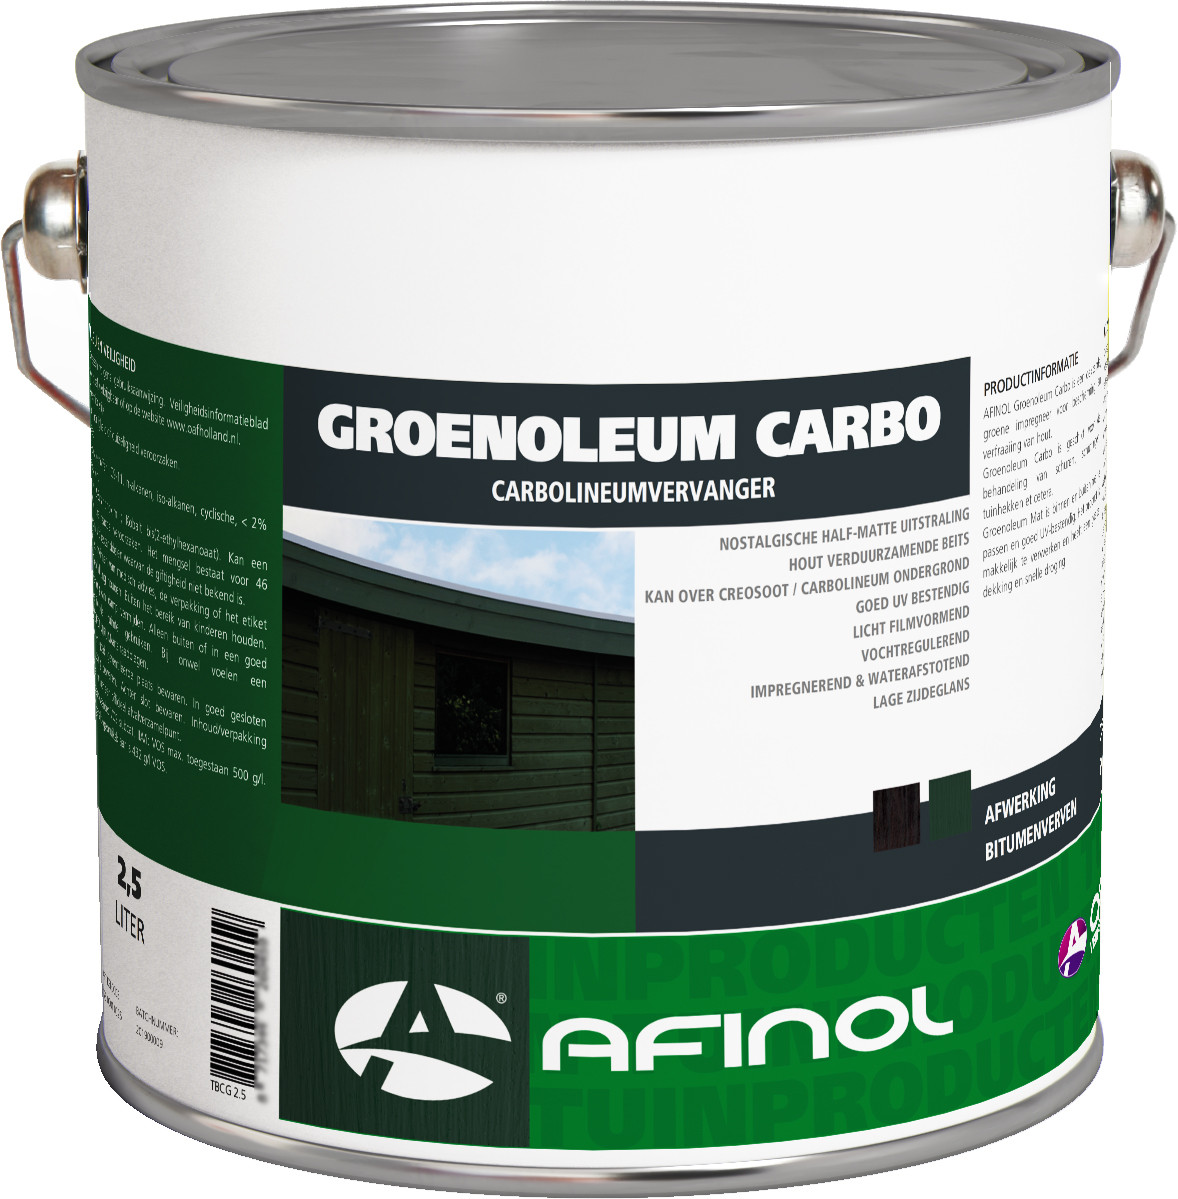 Afinol Groenoleum Carbo 2,5 liter